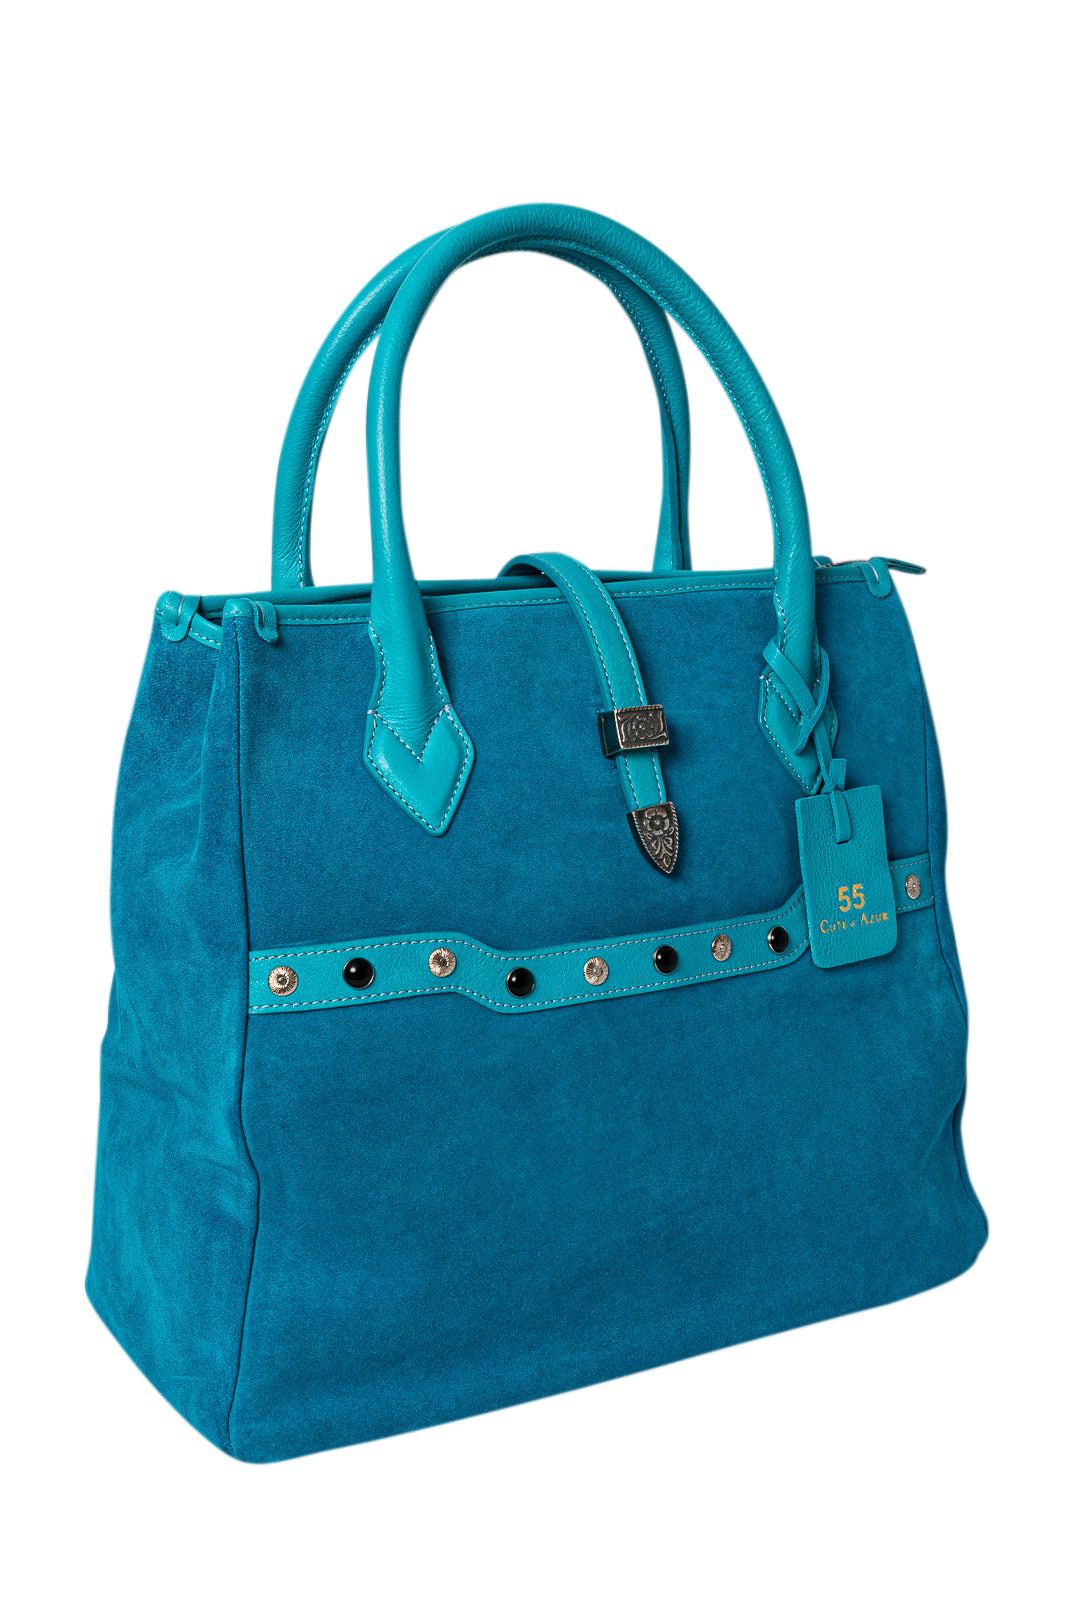 55 Cote D'Azur-Suede leather handbag-SHOPPING TEX - TORQUOISE-dgallerystore